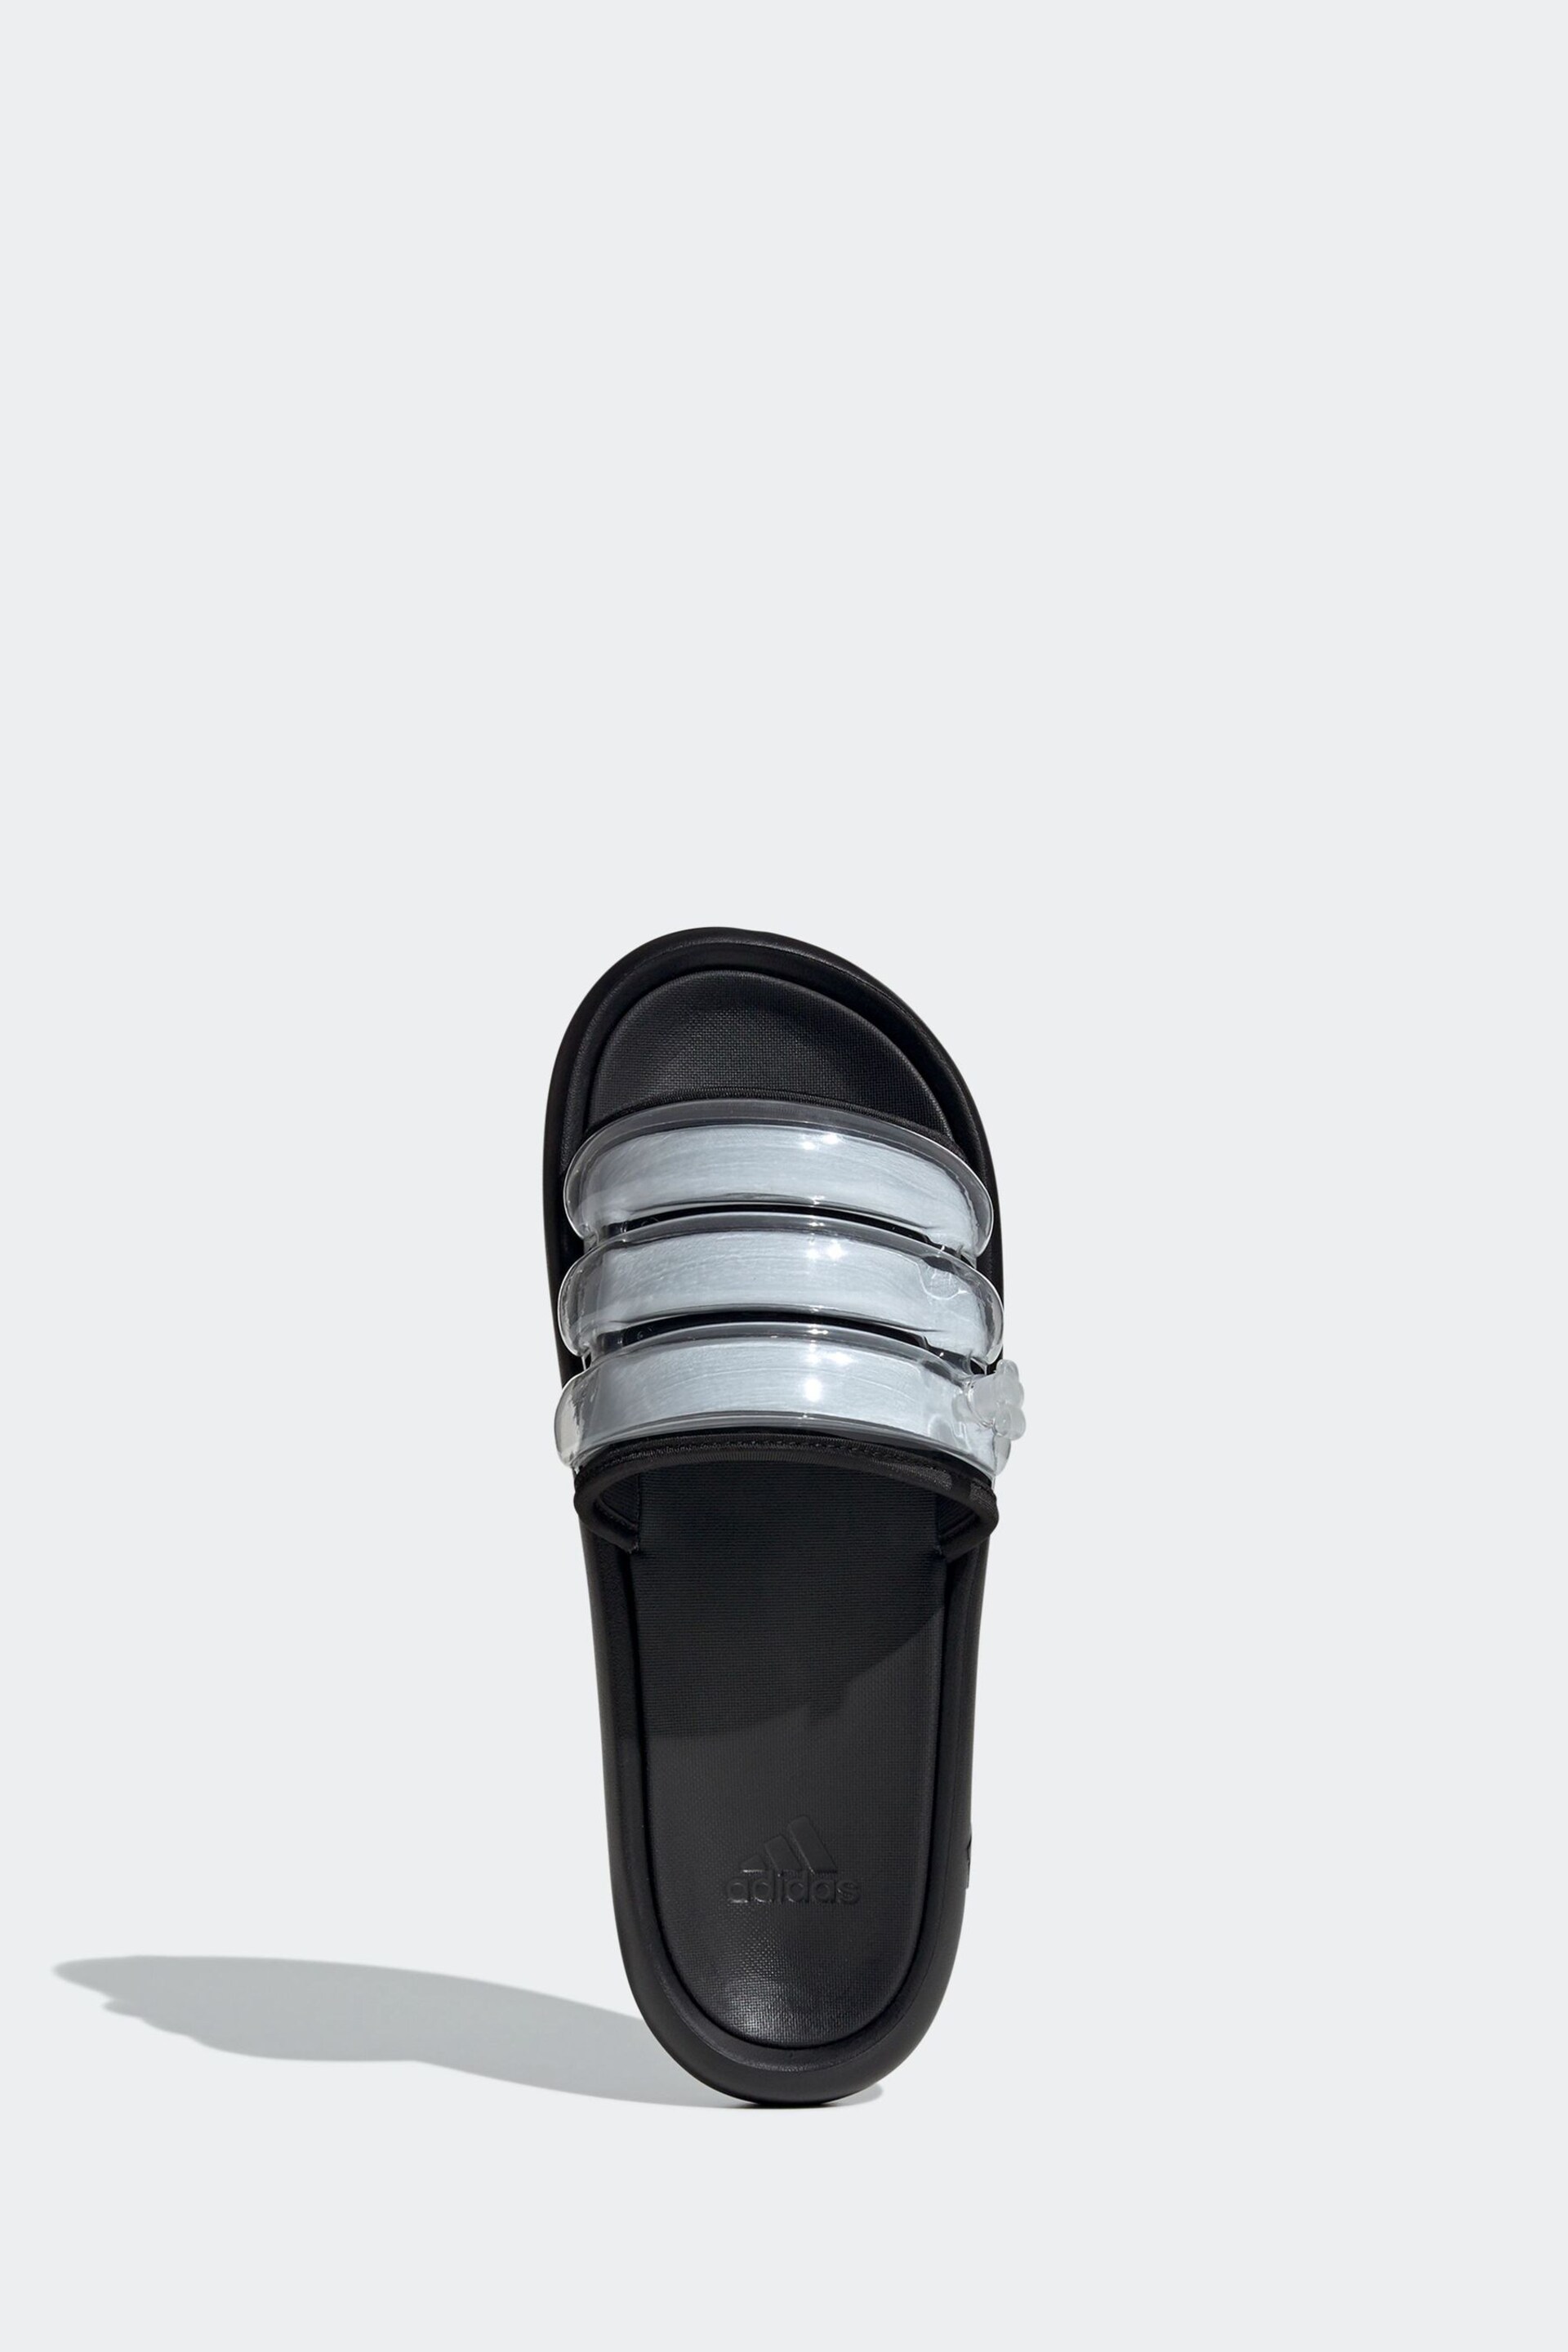 adidas Black Sportswear Zplaash Slides - Image 6 of 9